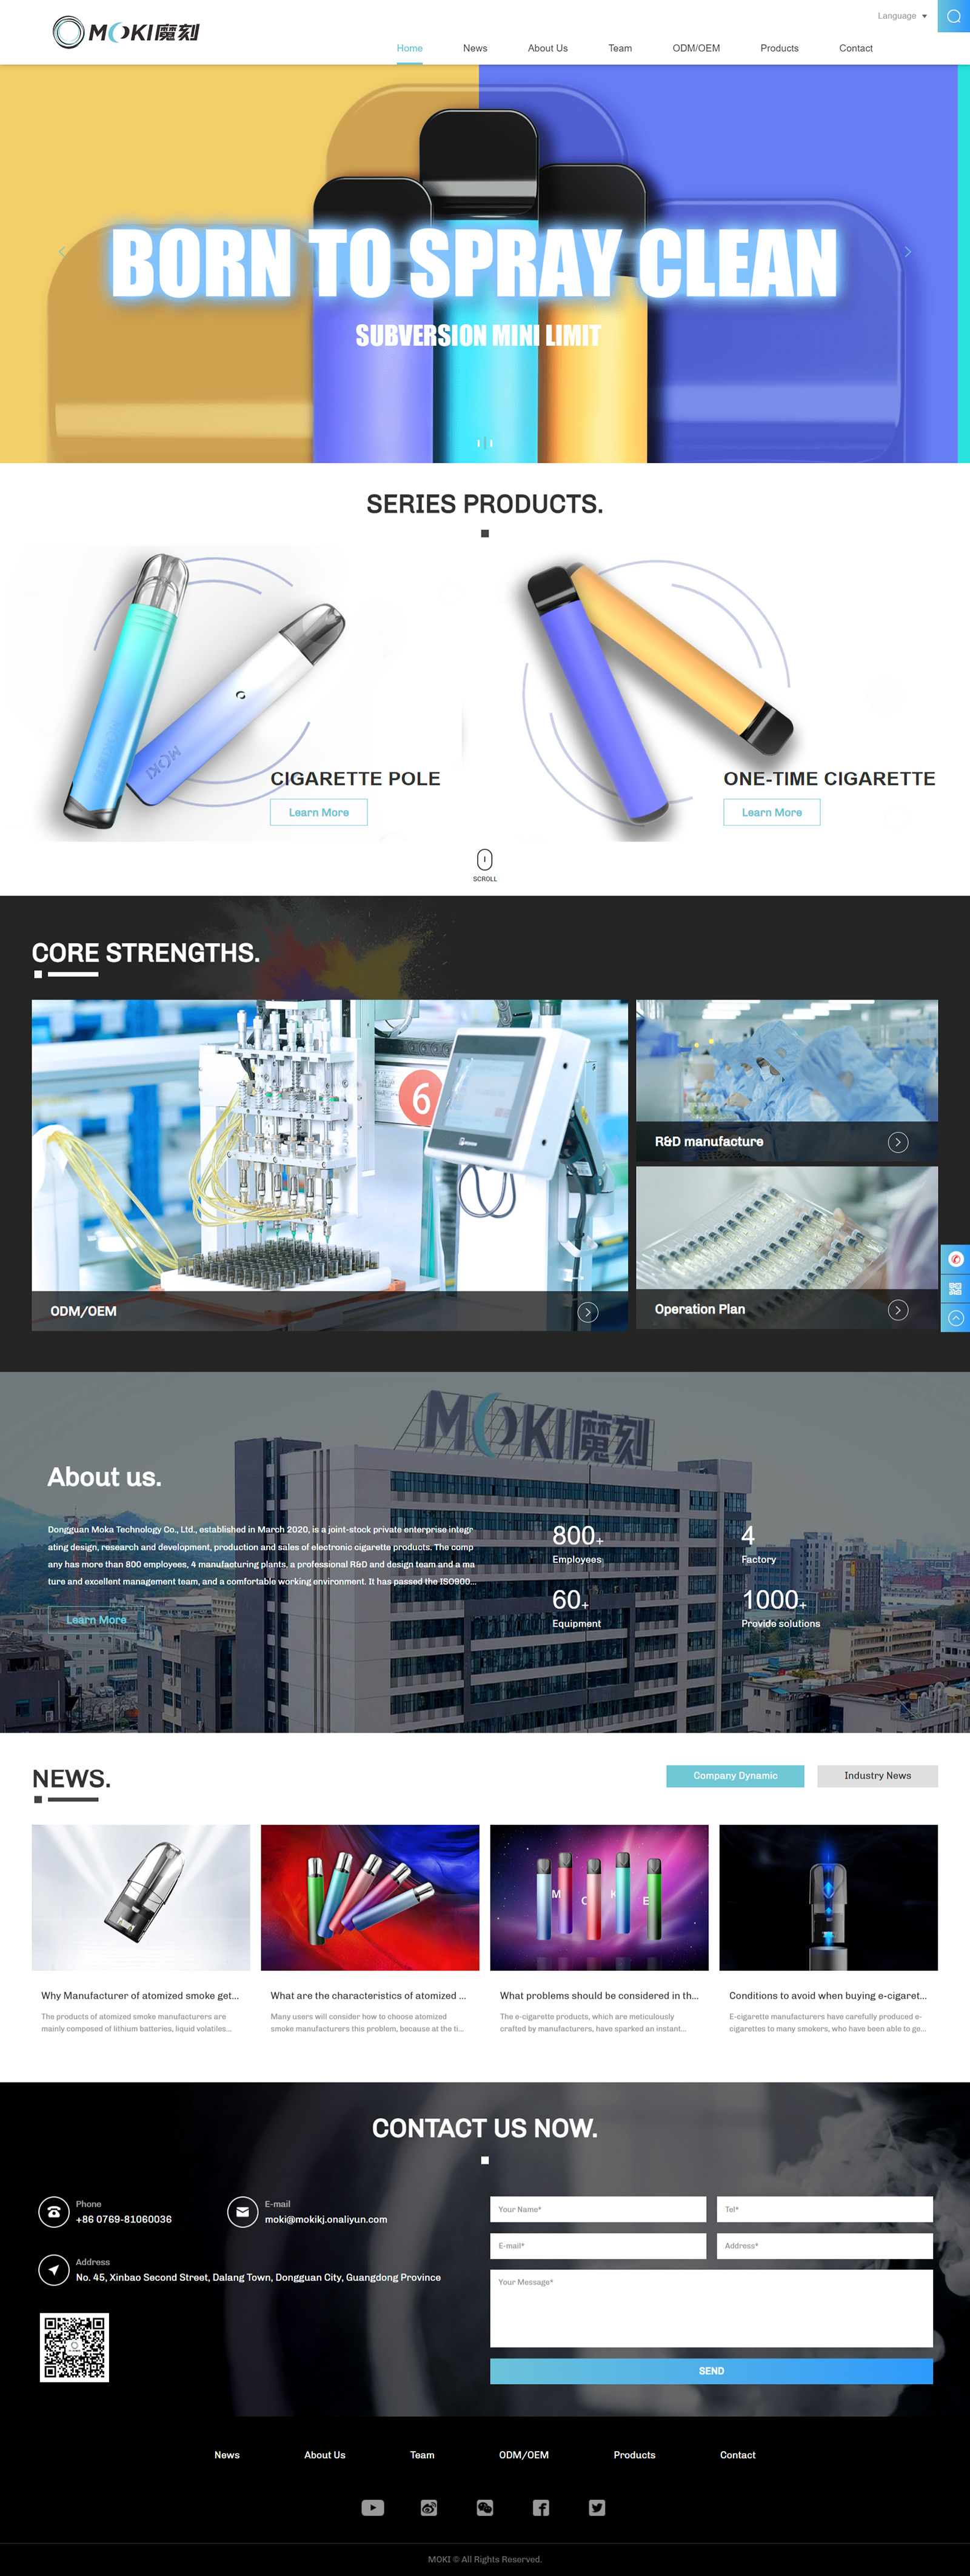 Dongguan-Moka-Technology-Co.,-Ltd